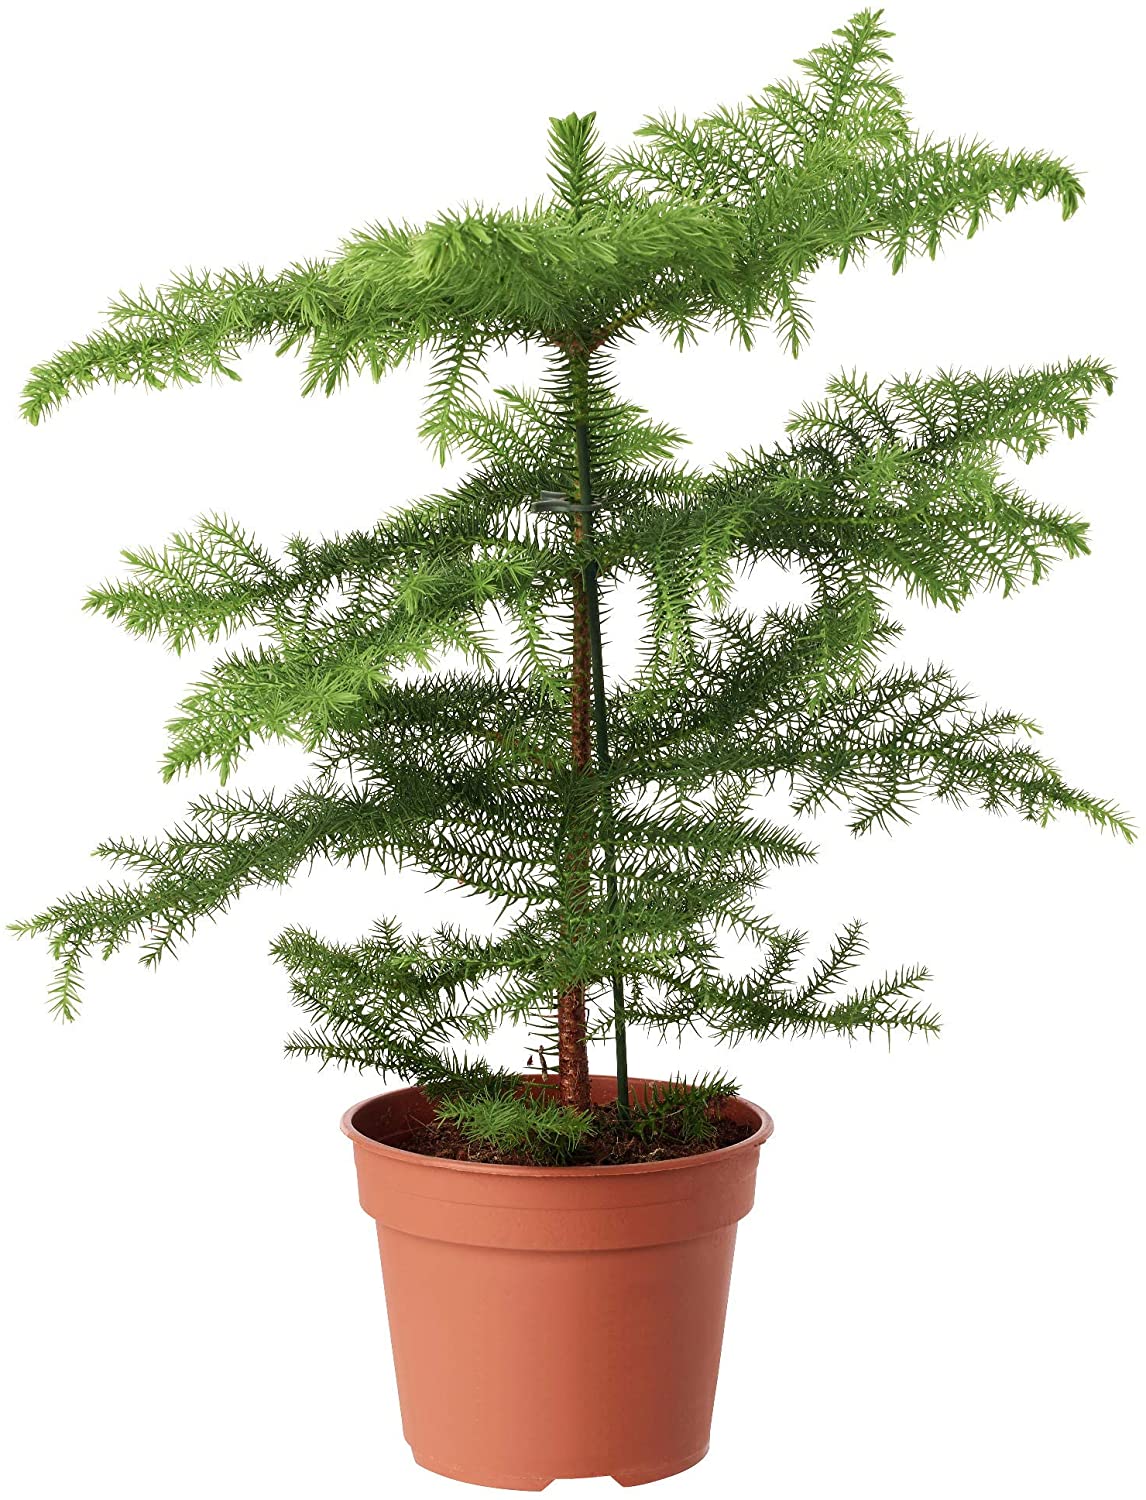 Norfolk Island Pine Trees That Please